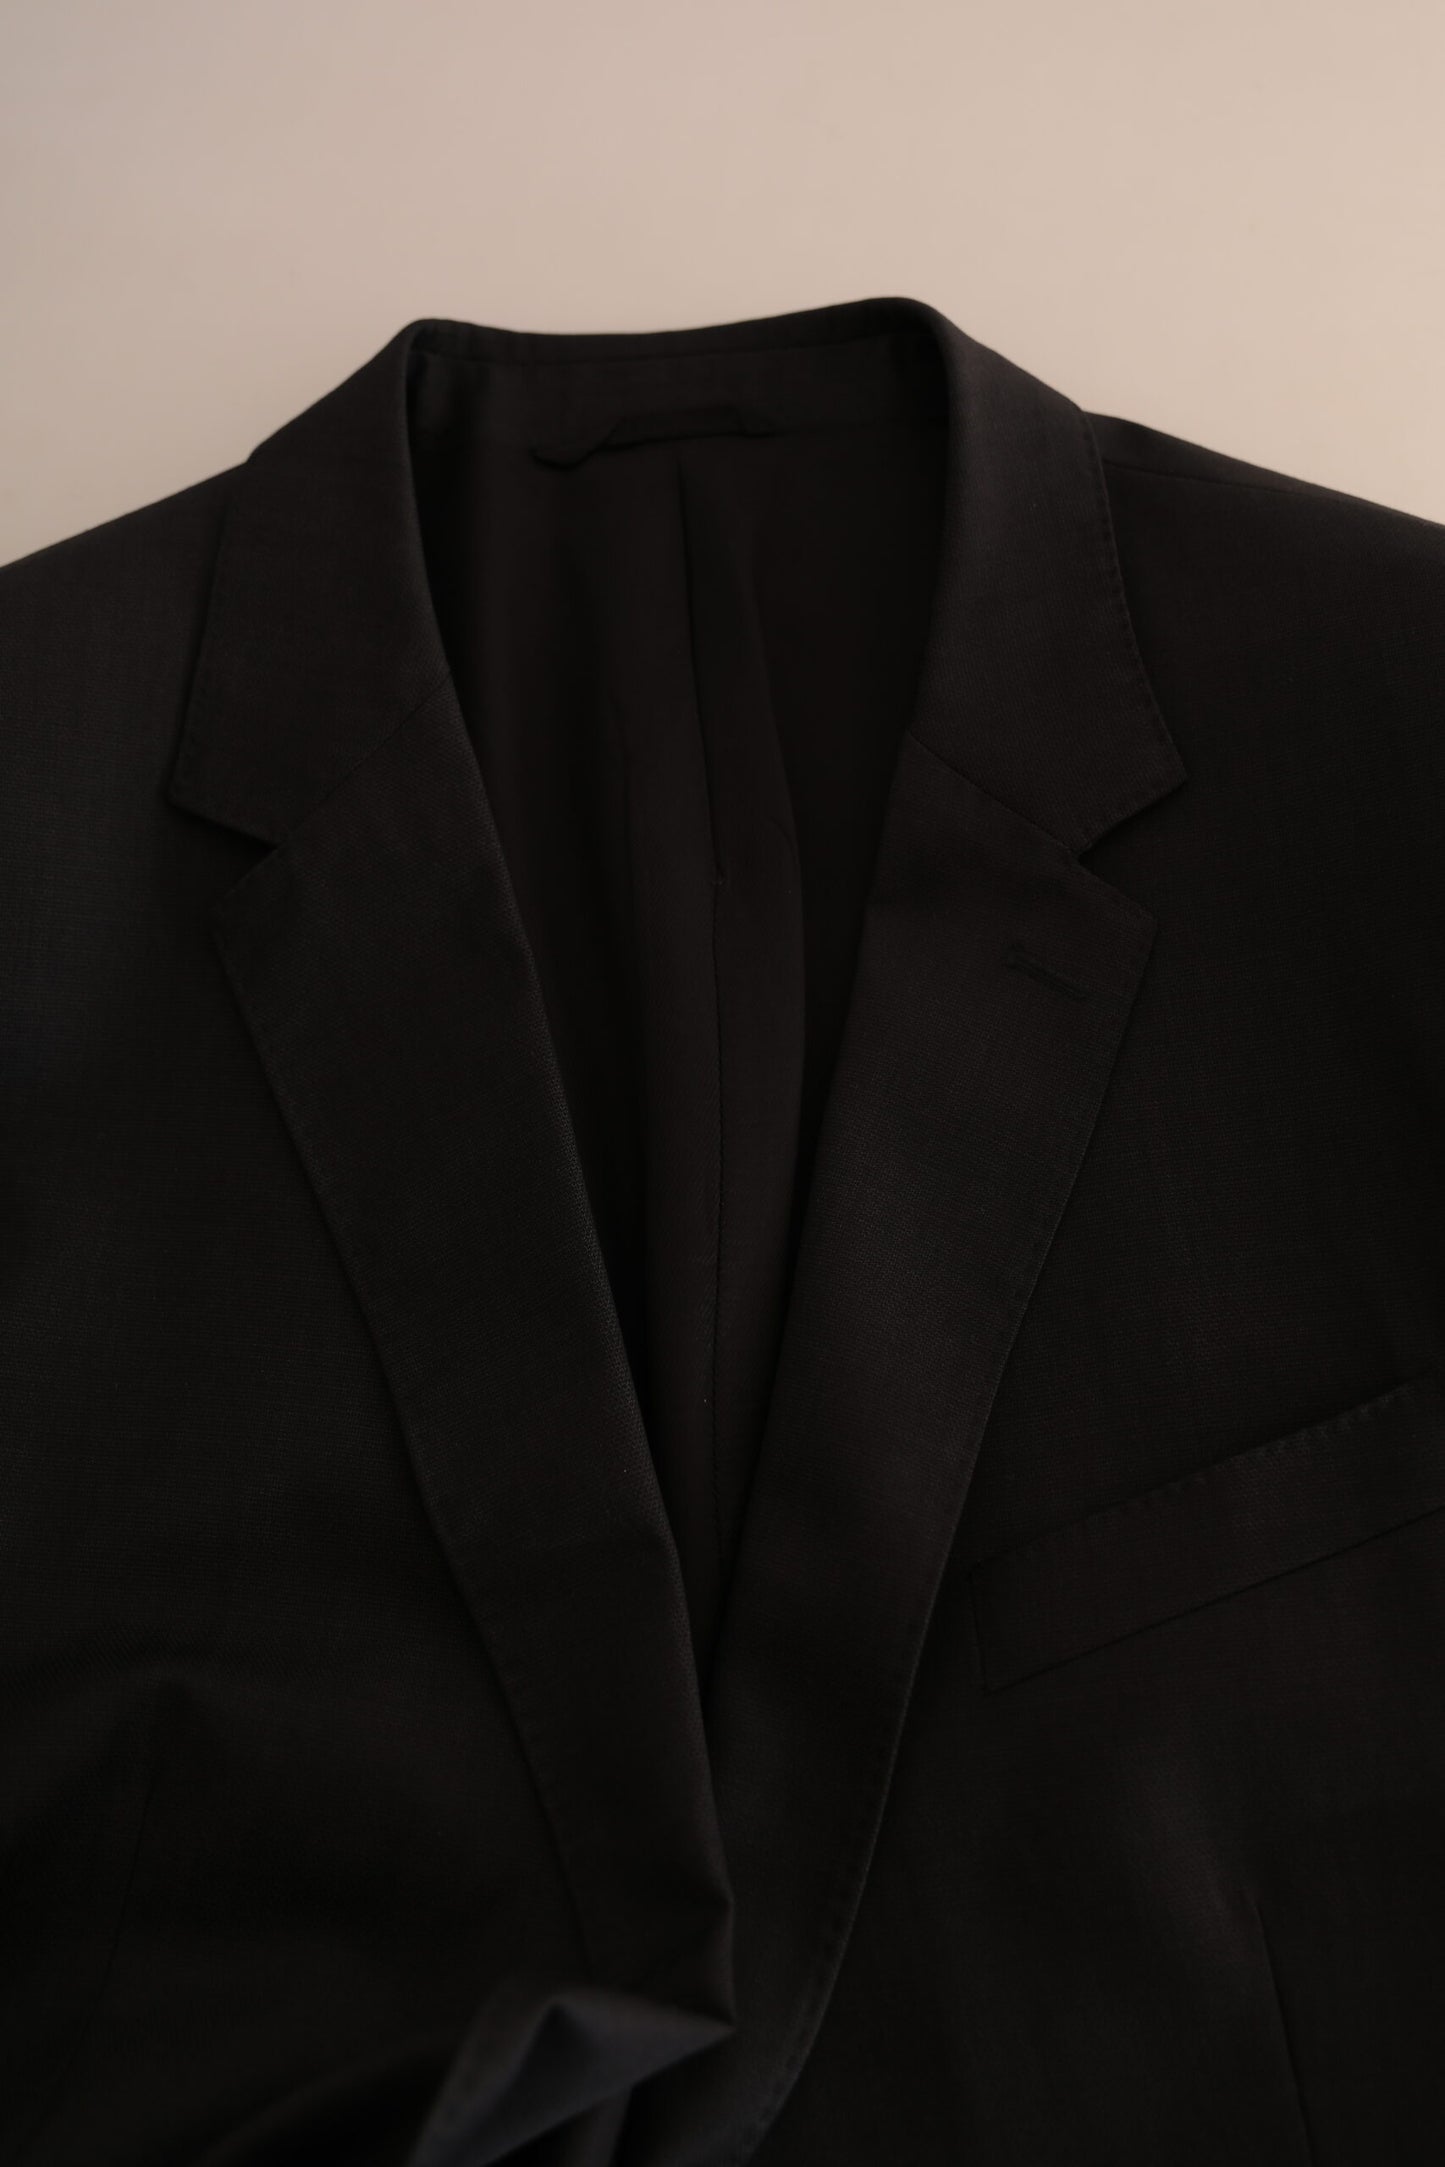 Dolce & Gabbana Men's Black MARTINI Single Breasted 2 Piece Suit